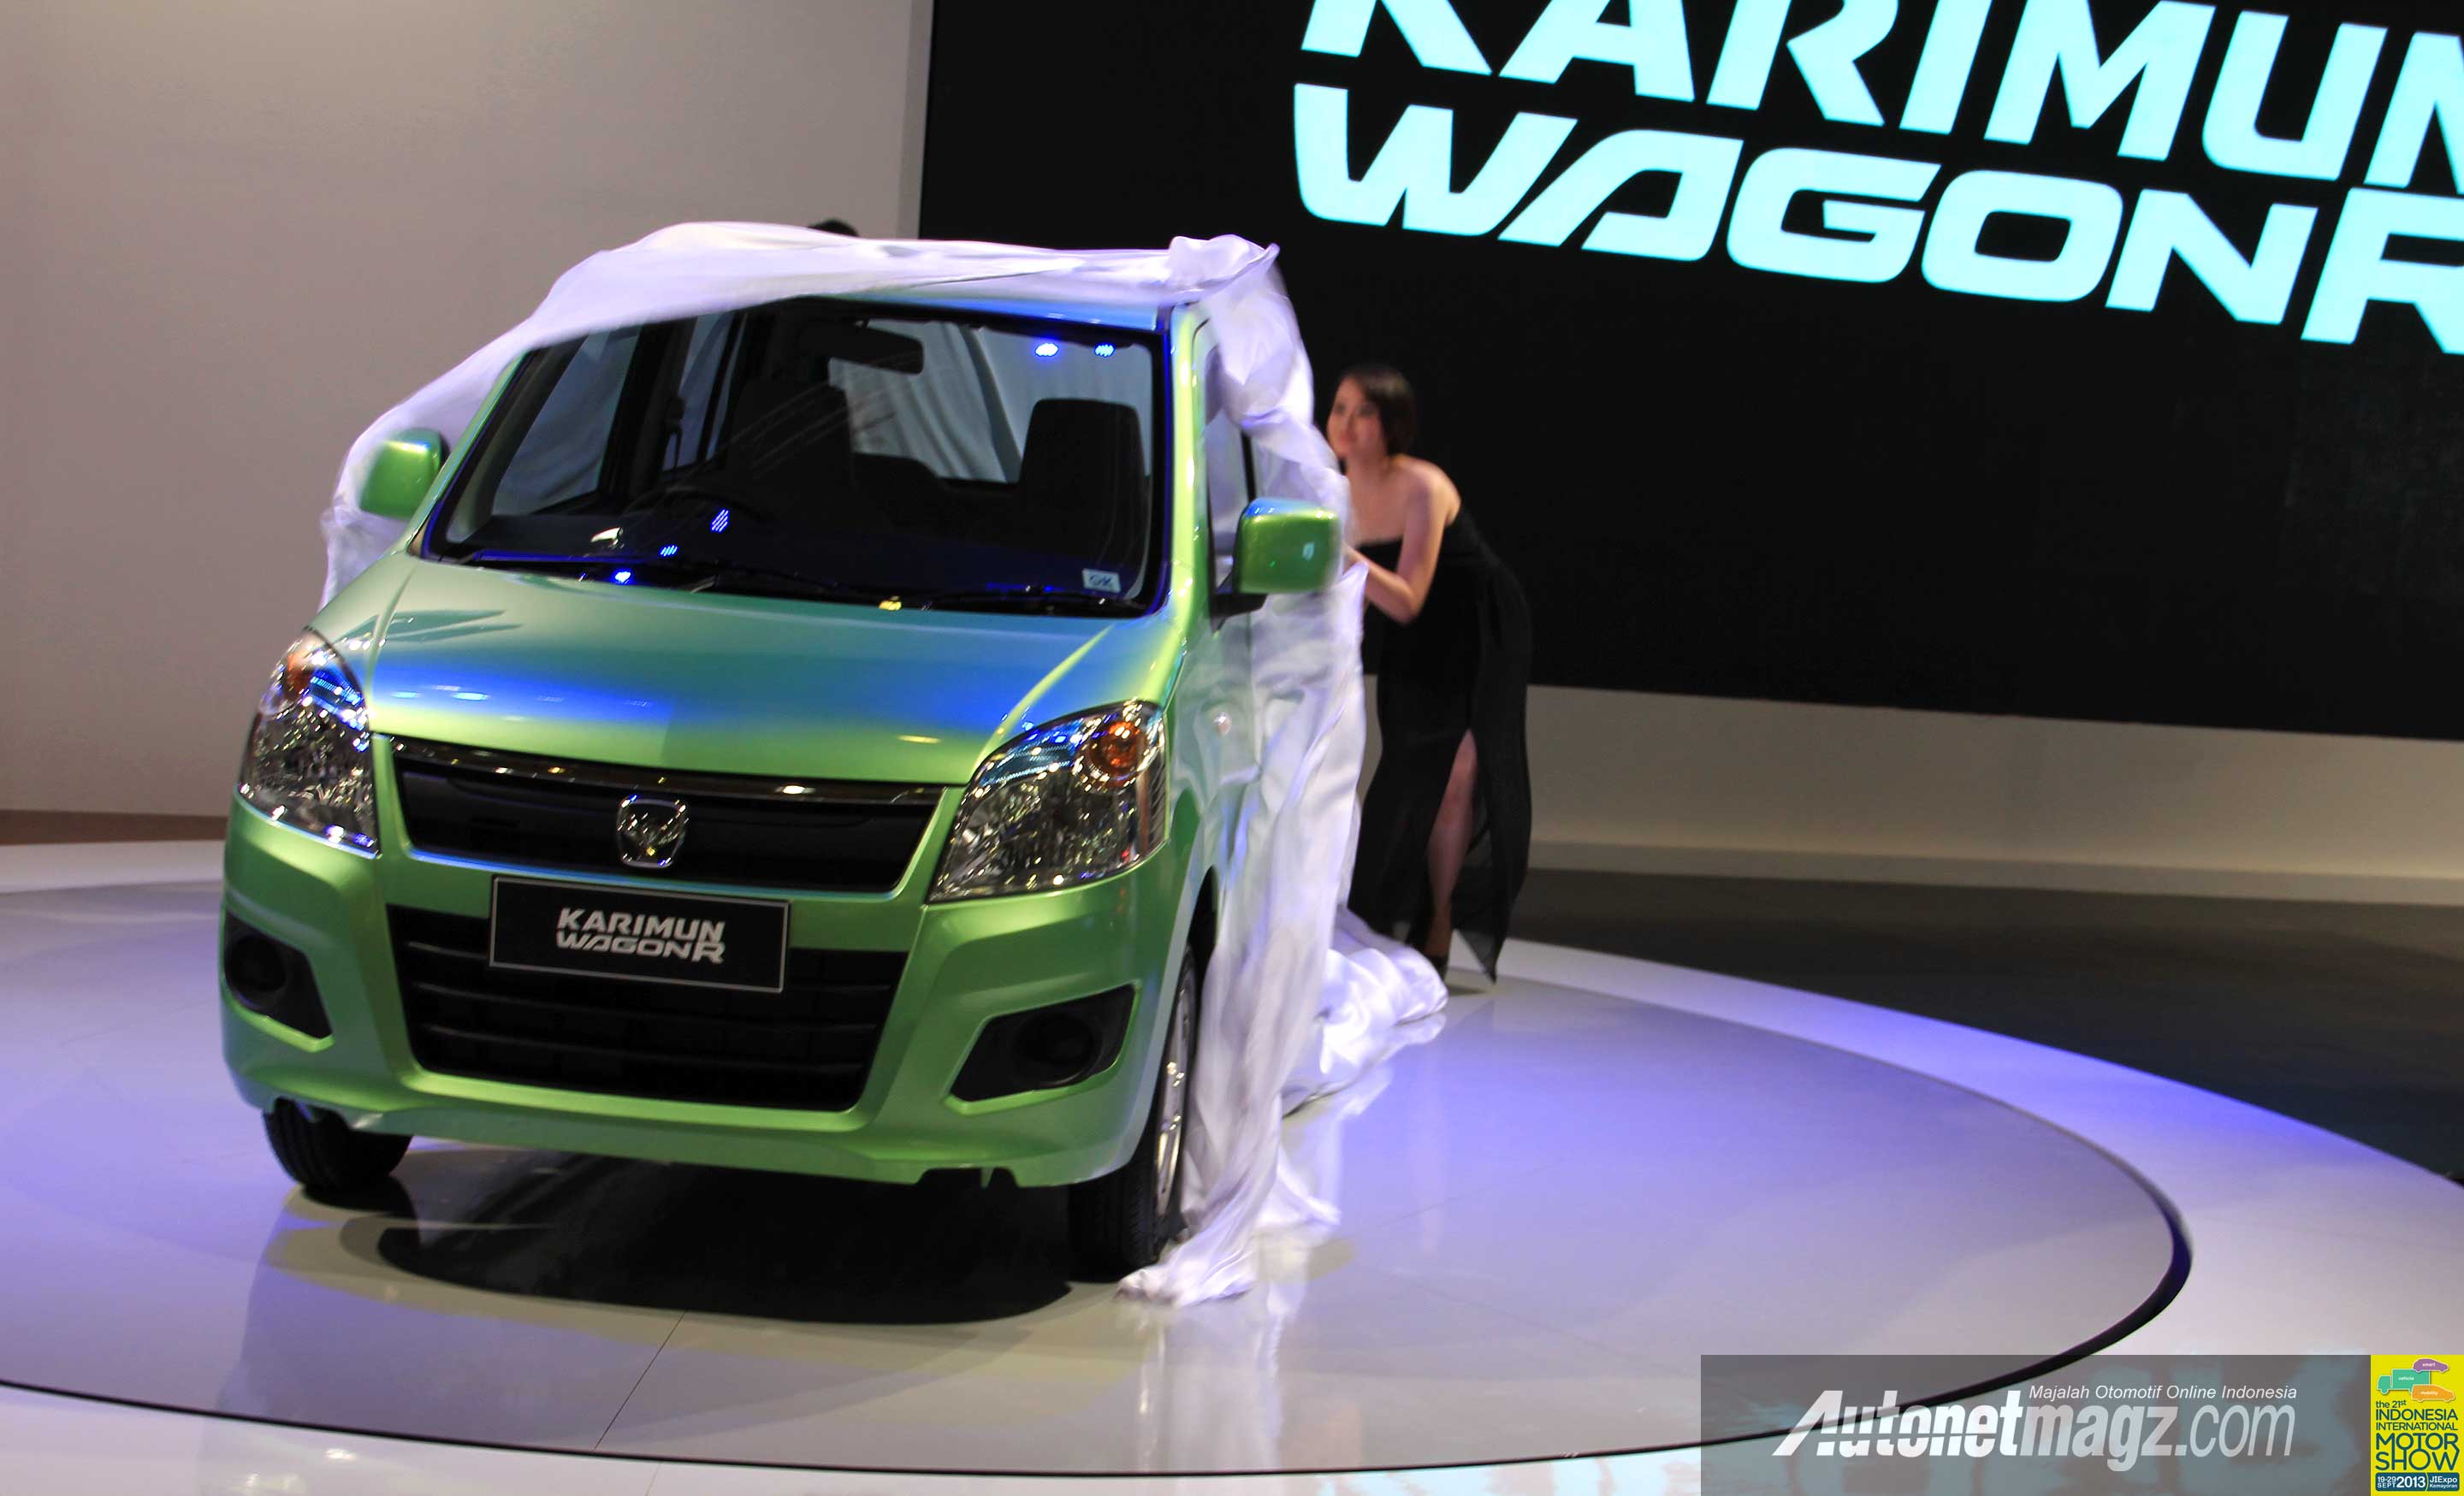 IIMS 2013, Harga resmi LCGC Suzuki Karimun Wagon R: Akhirnya Harga Suzuki Karimun Wagon R LCGC Diumumkan!